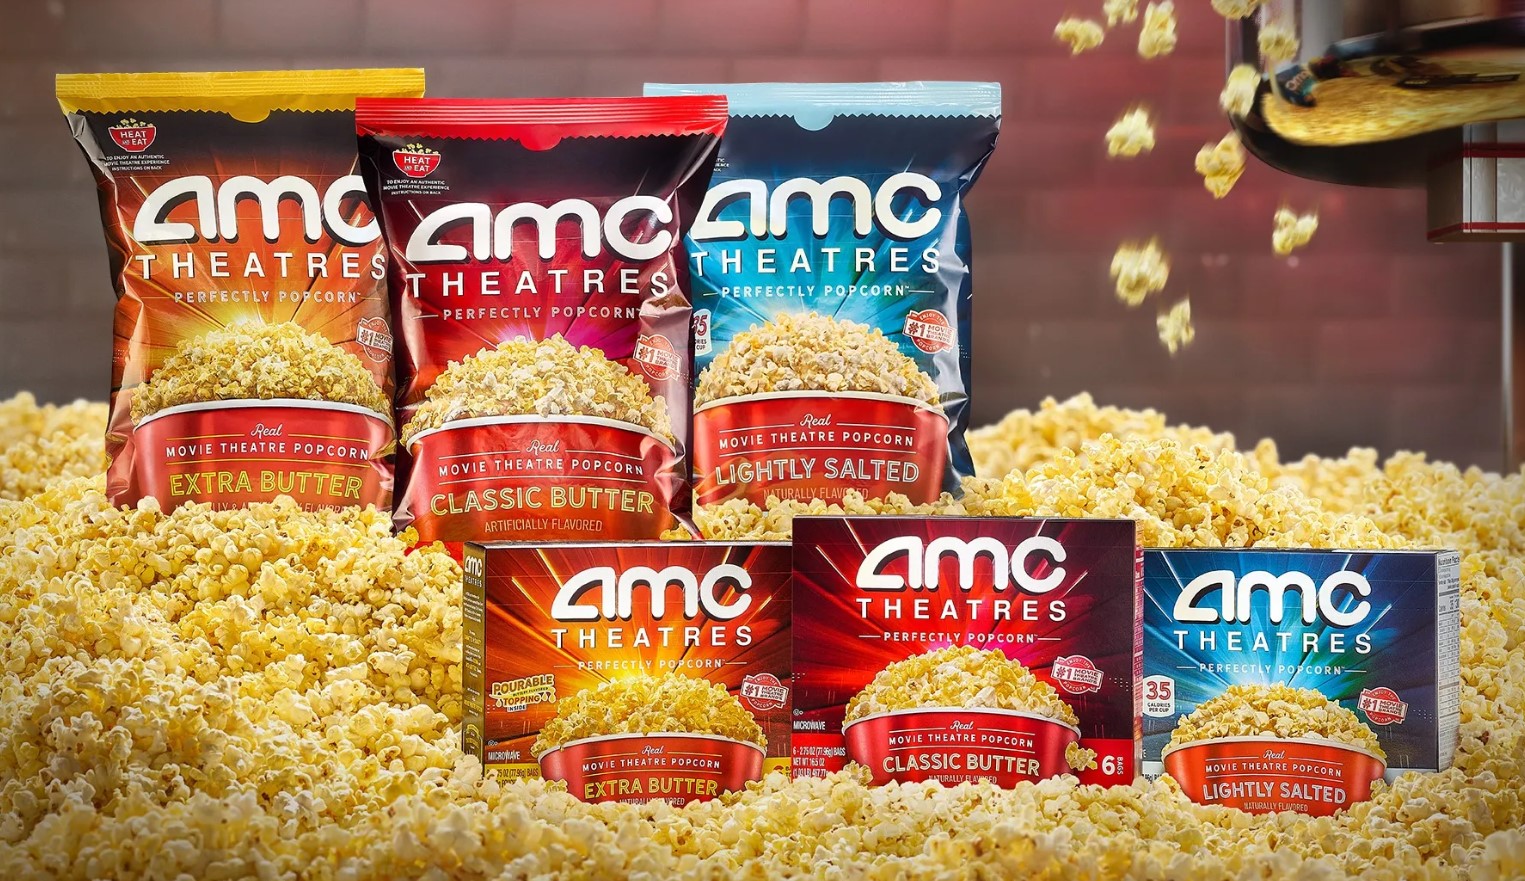 AMC theatres popcorn at Walmart